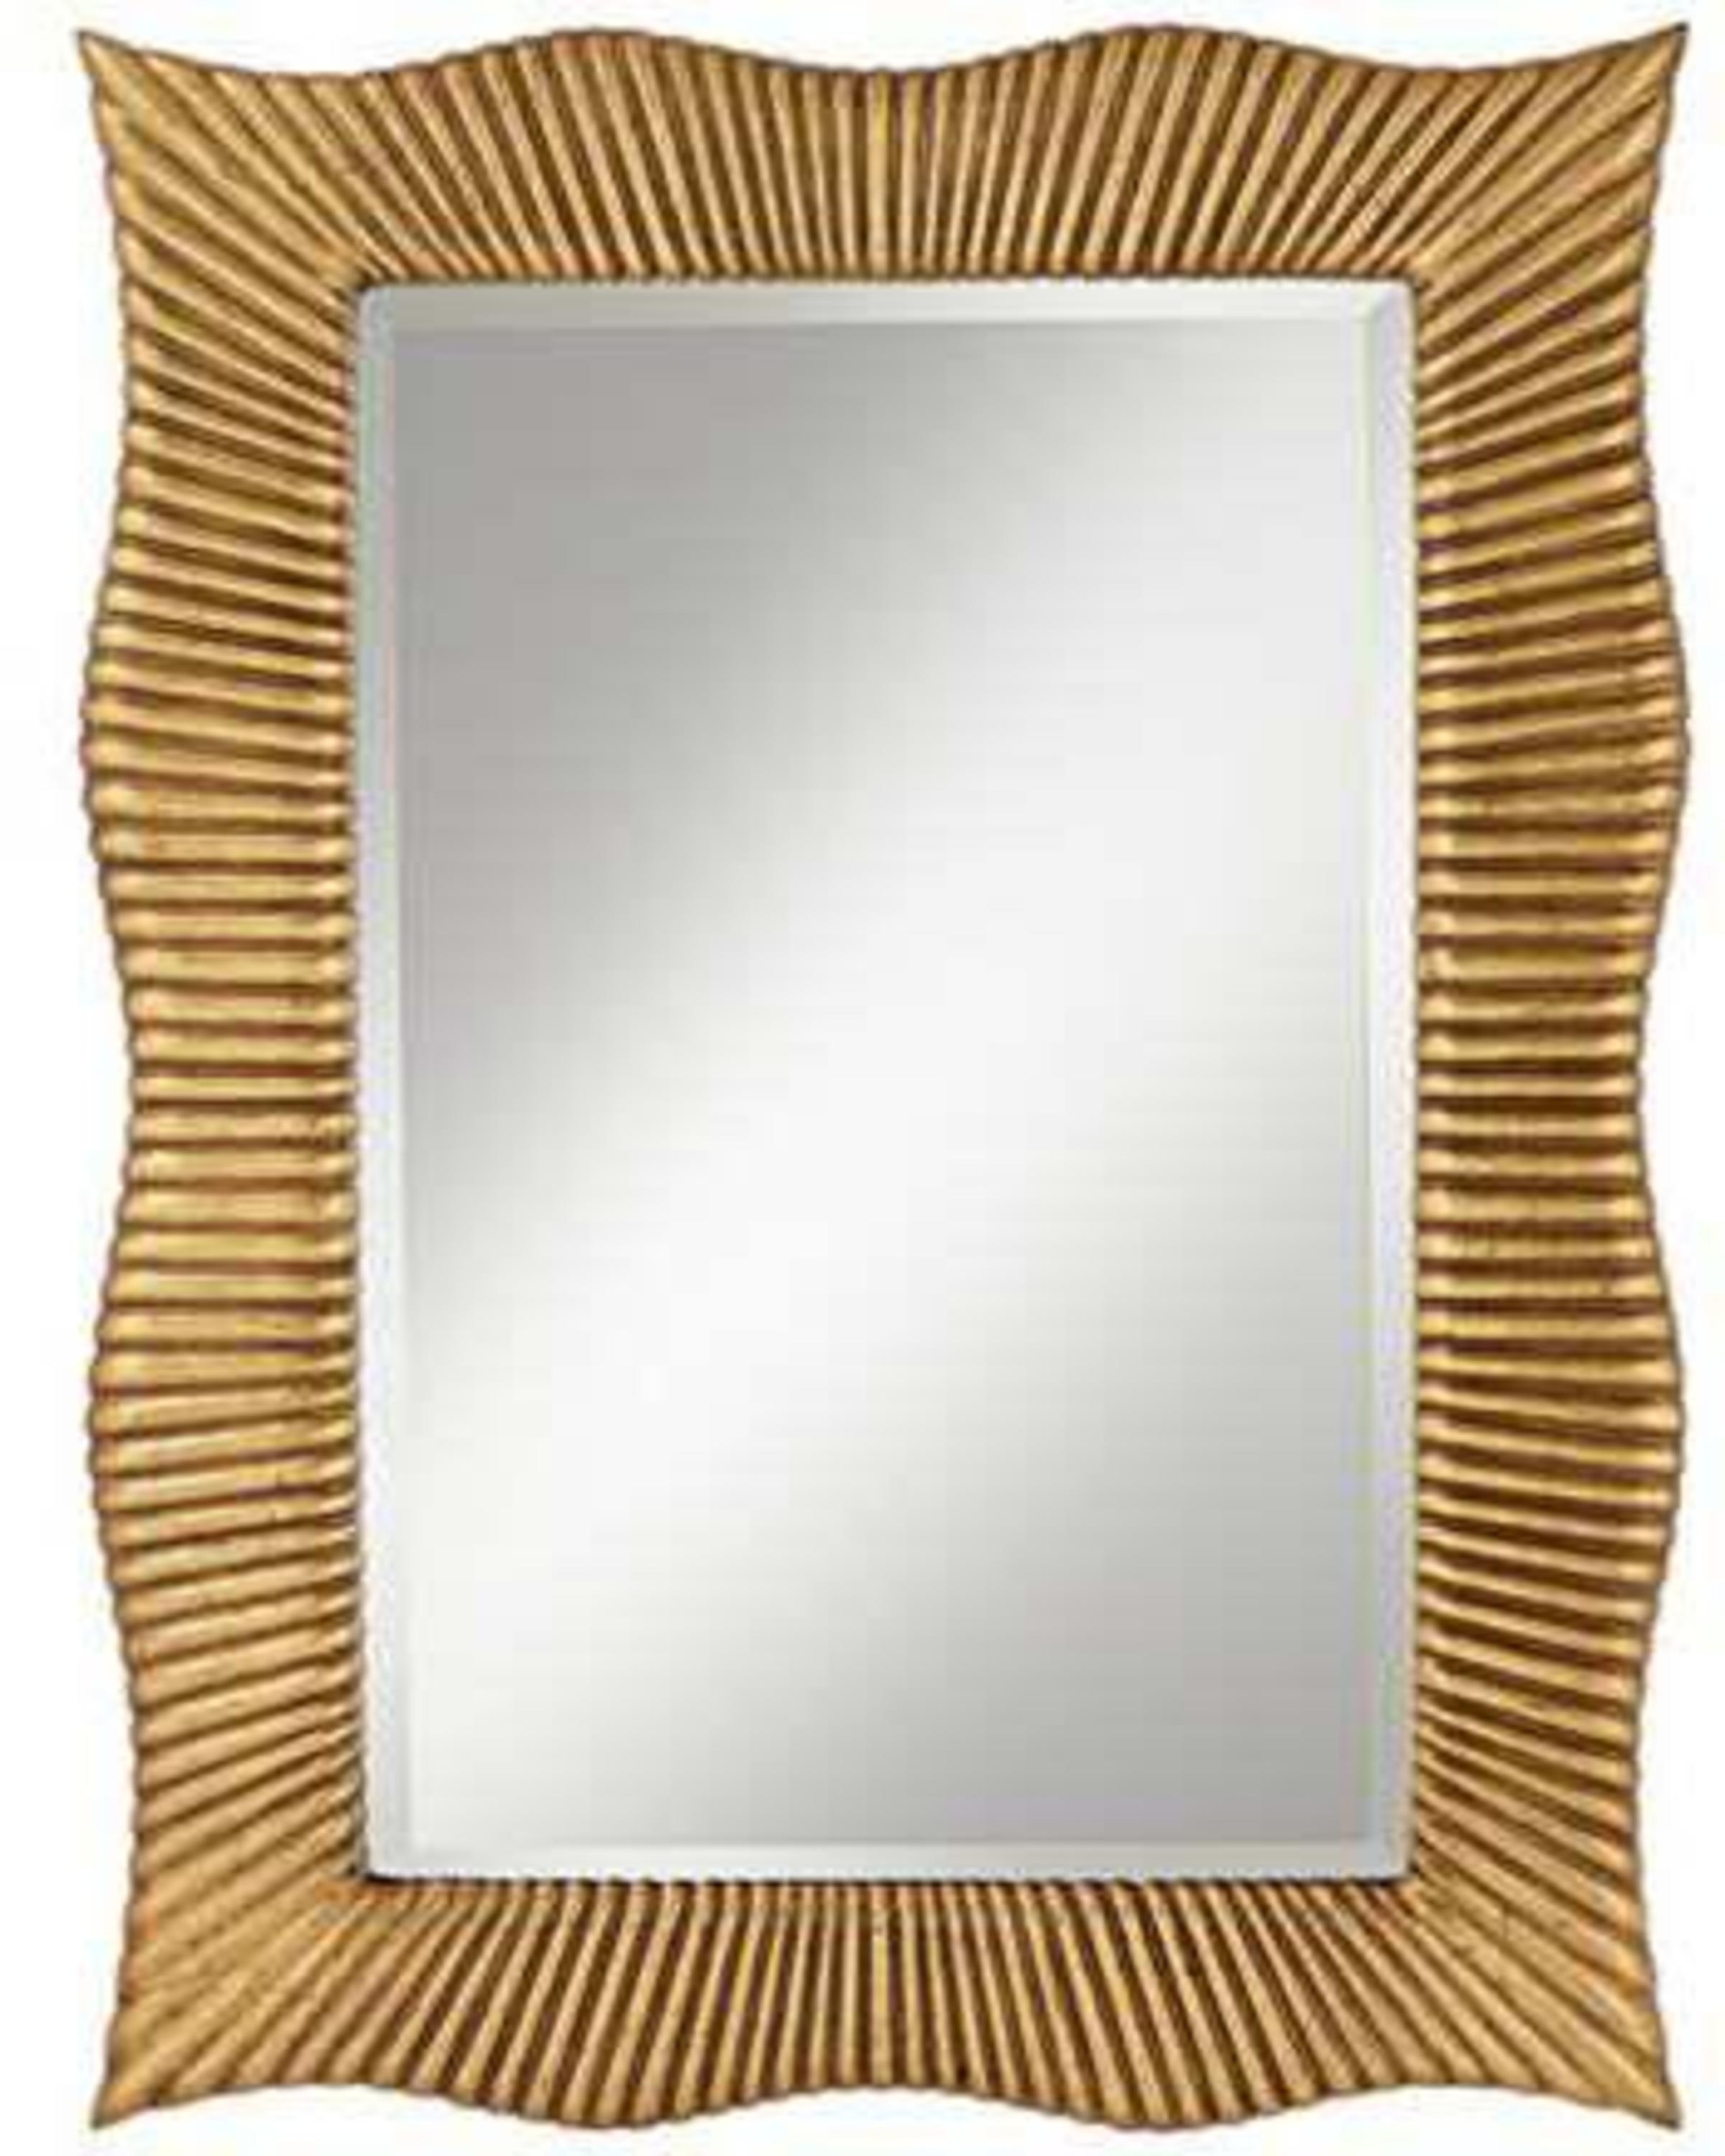 Luxury gold leaf mirror